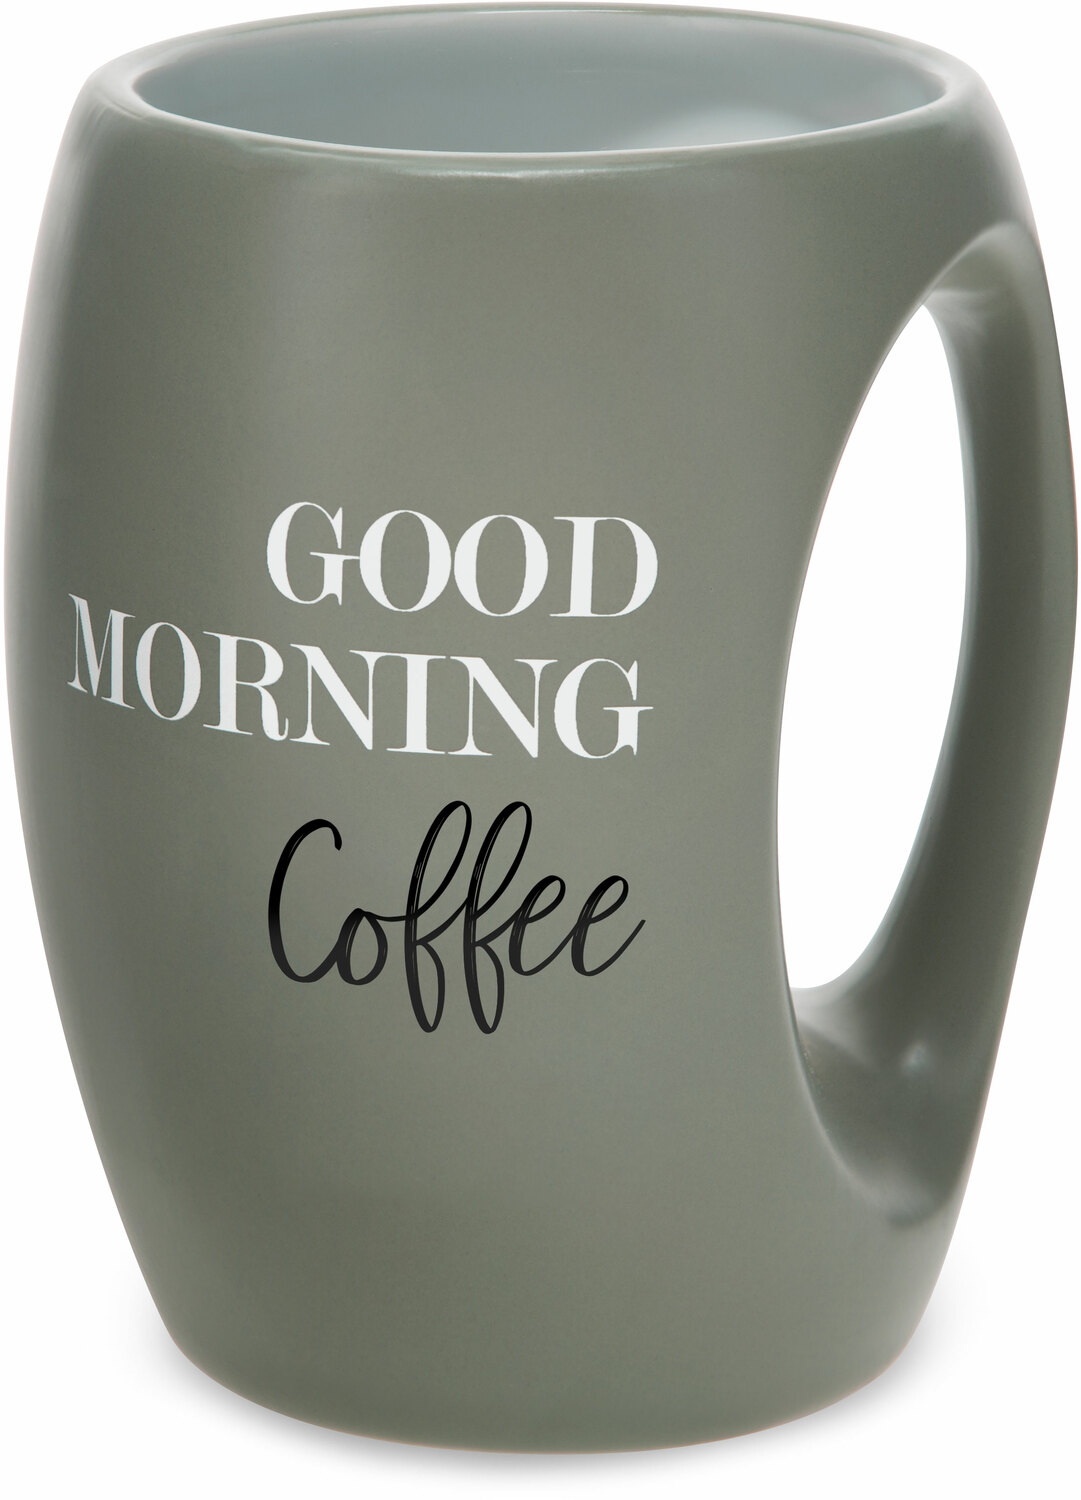 Coffee by Good Morning - Coffee - 16 oz Mug